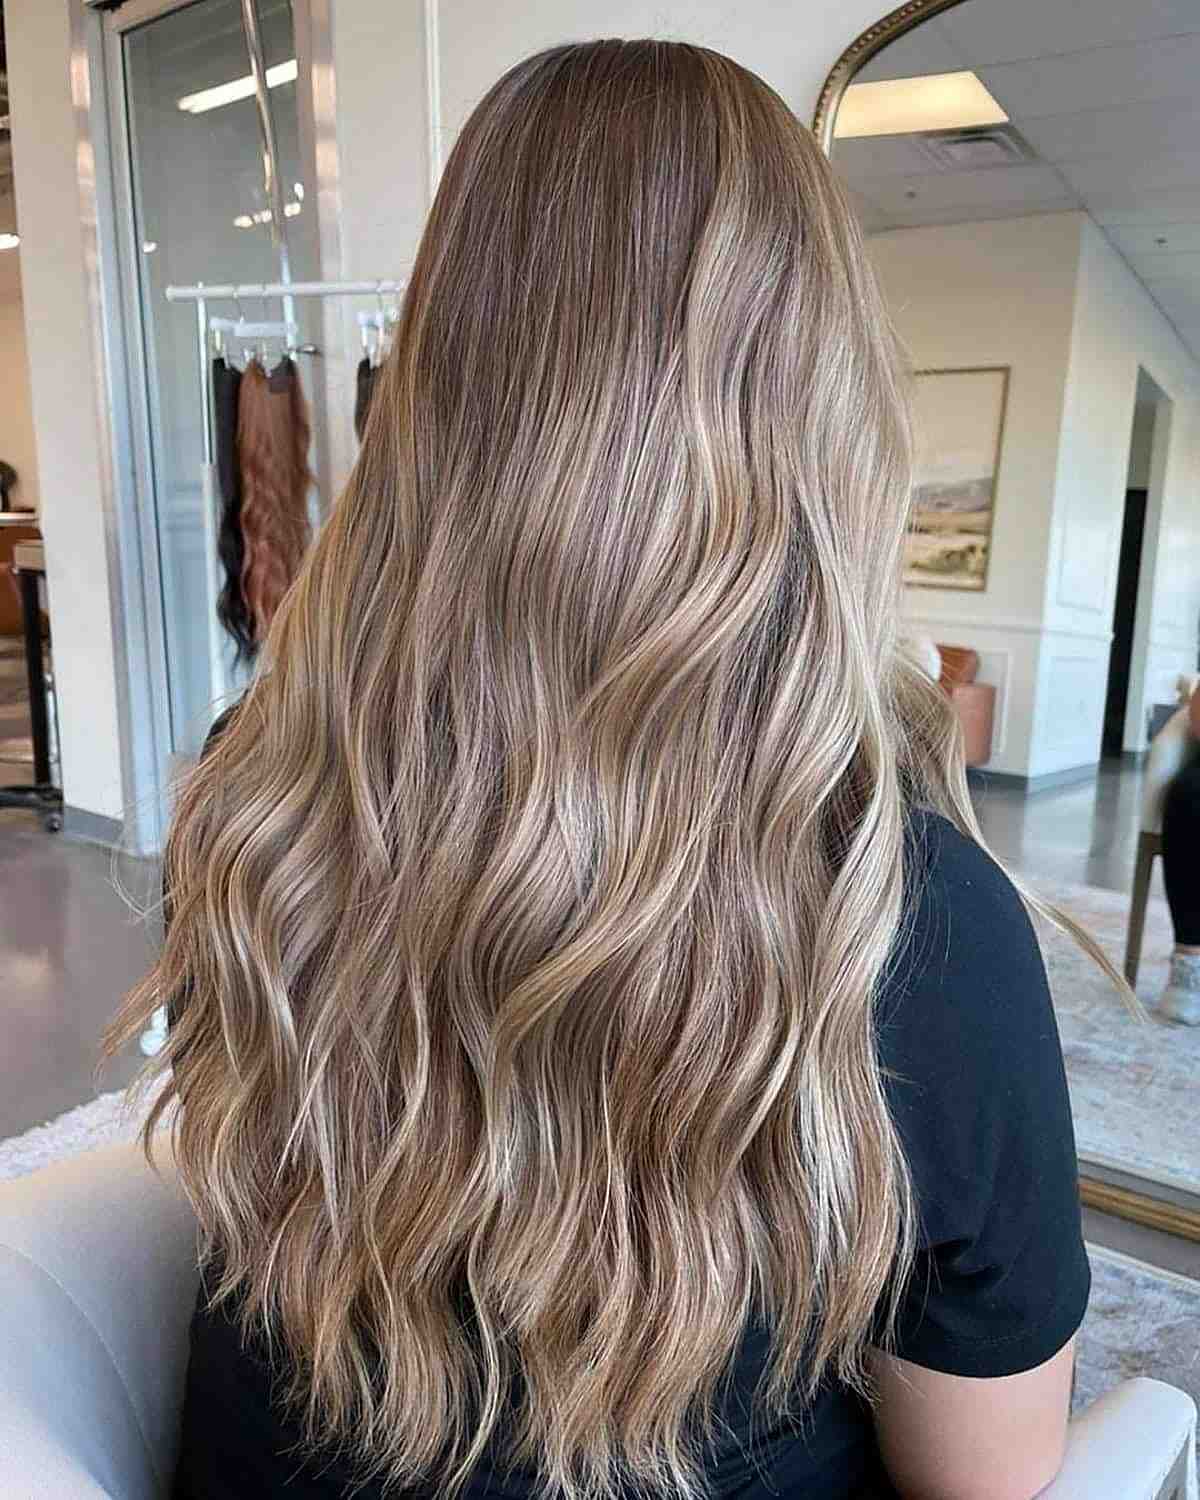 Light brown highlights on blonde hair